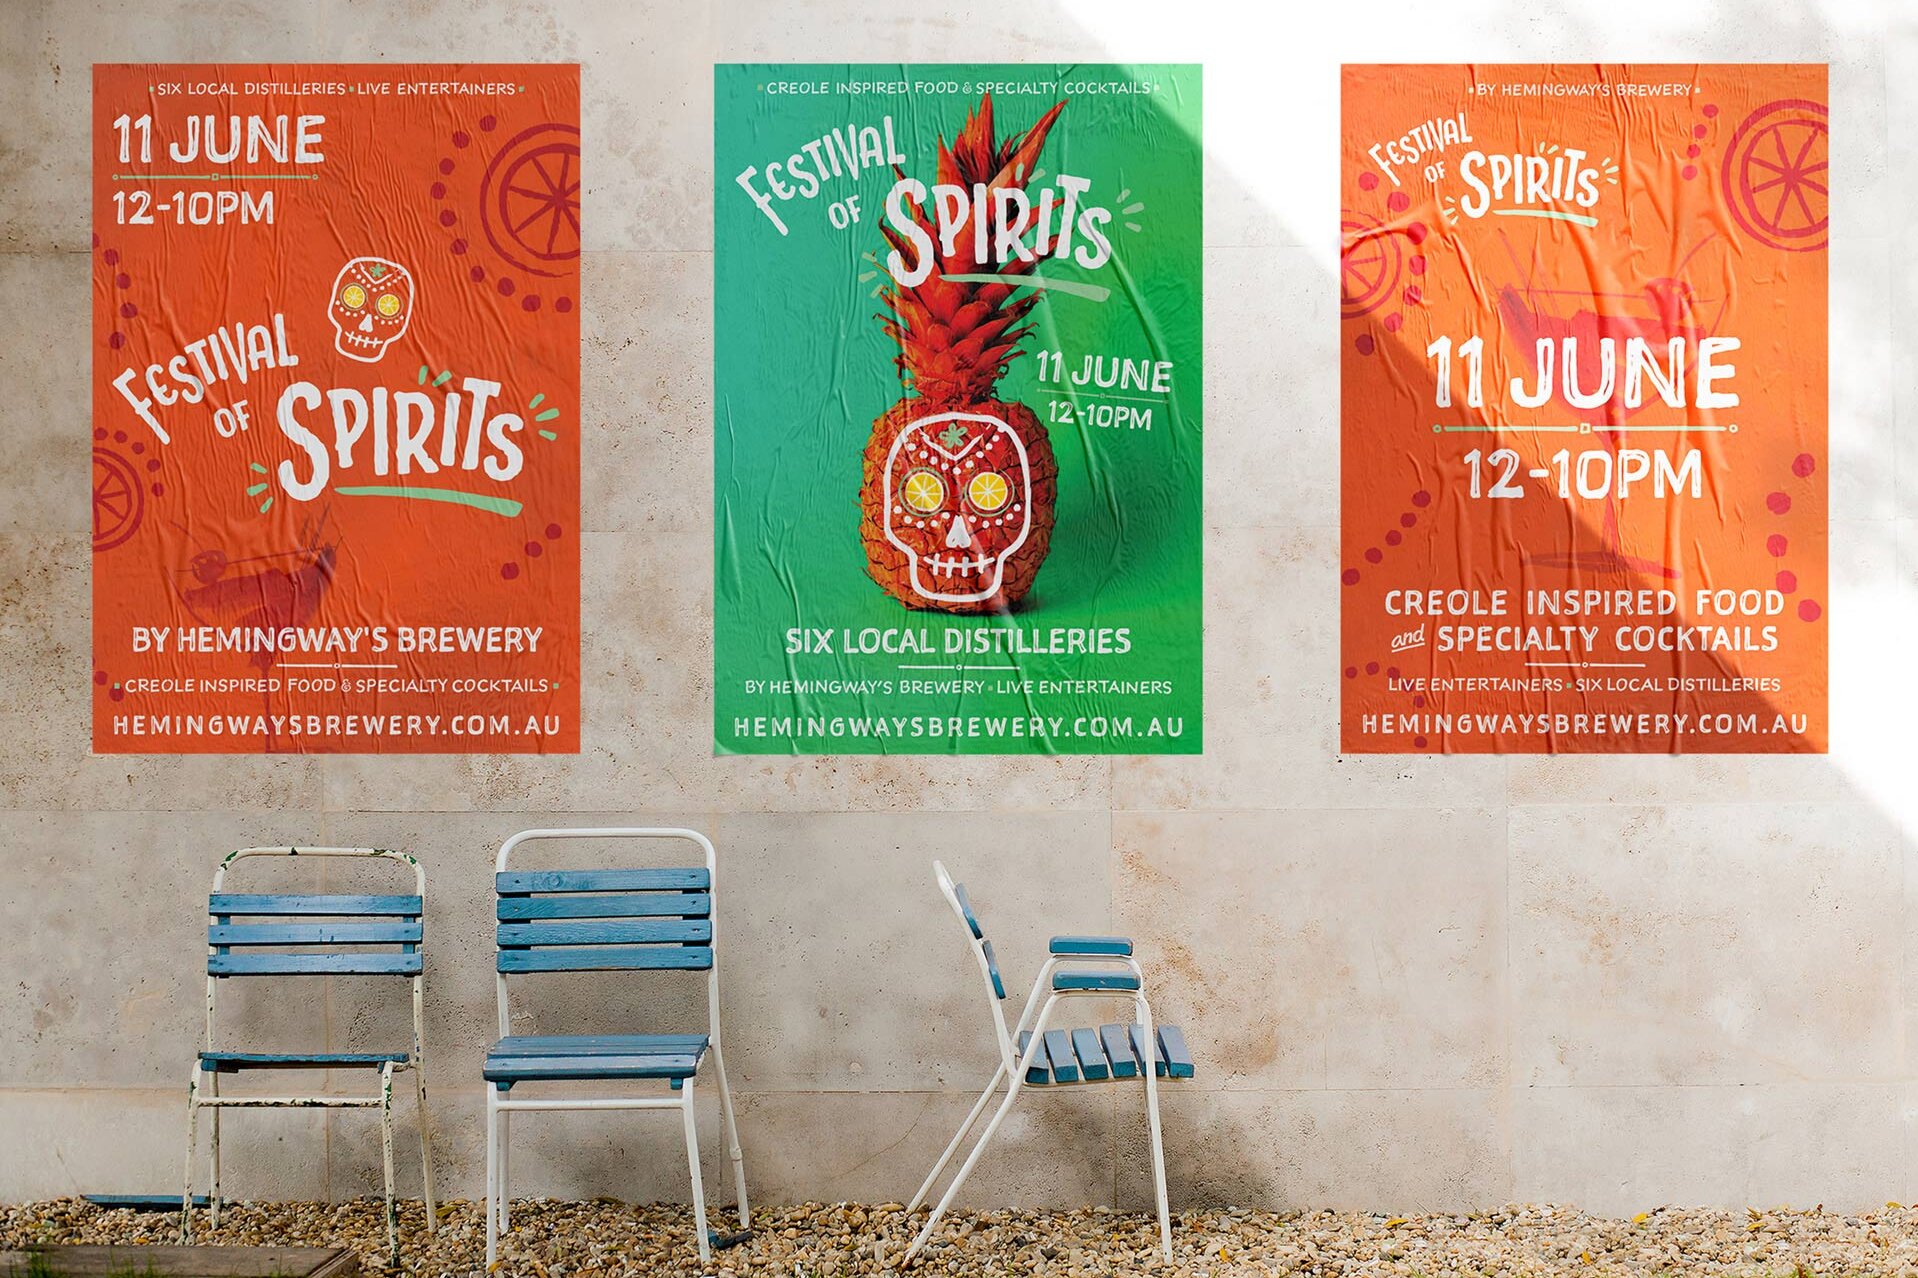 Hemingway's Festival of Spirits posters